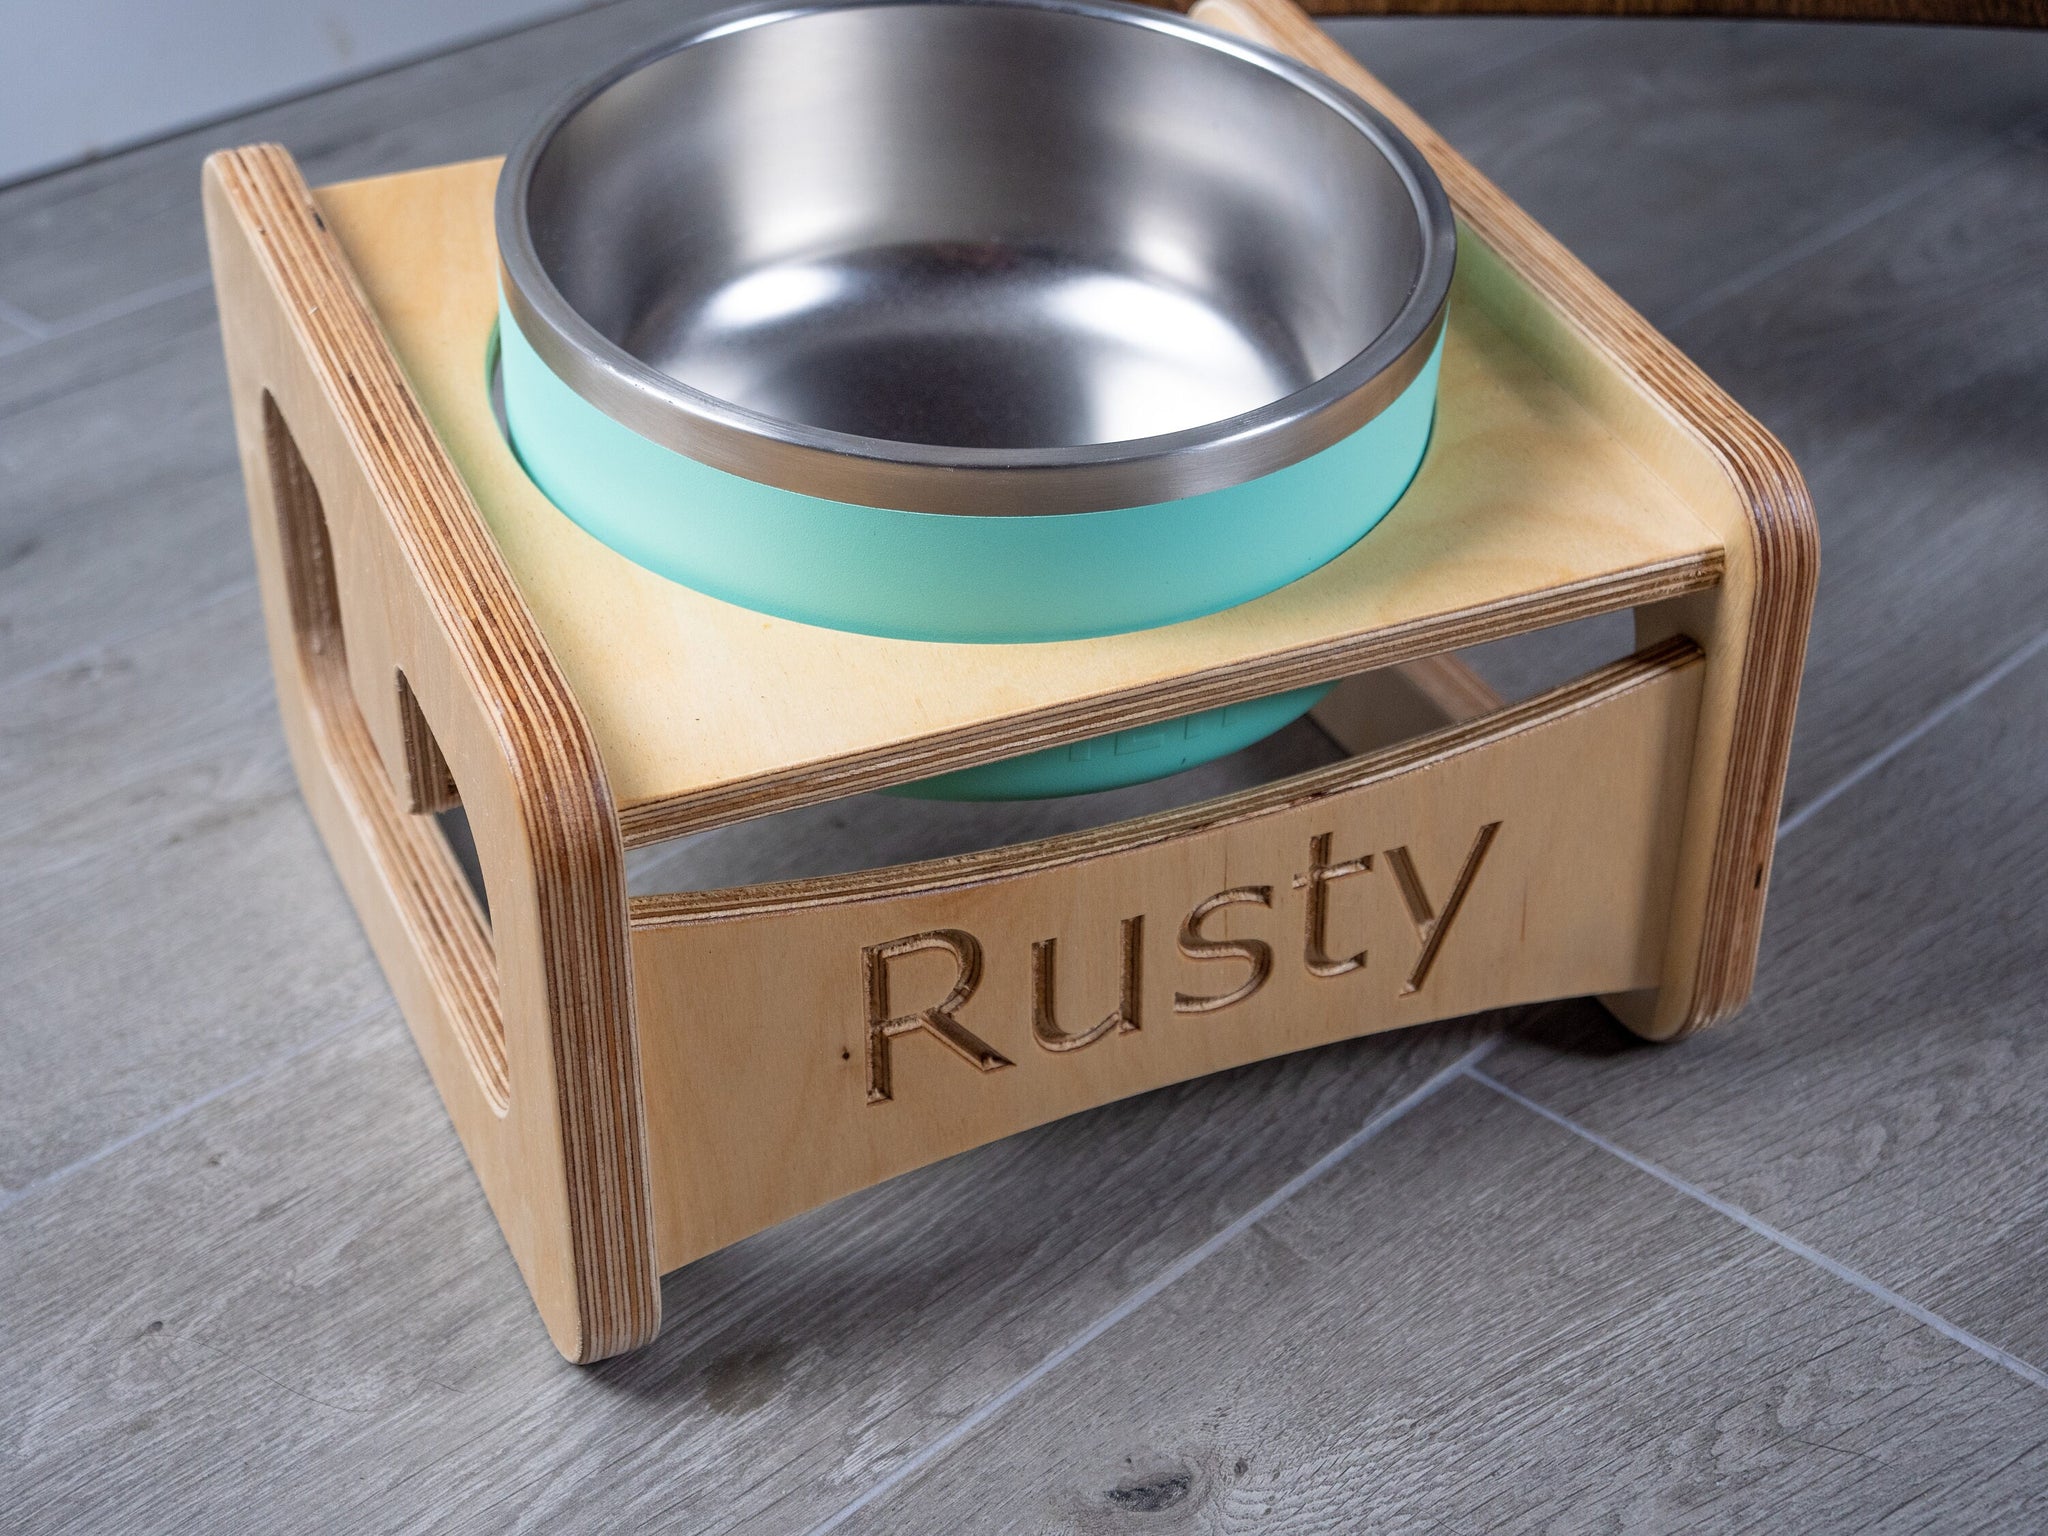 Yeti Raised Dog Bowl Stand - Fits RTIC